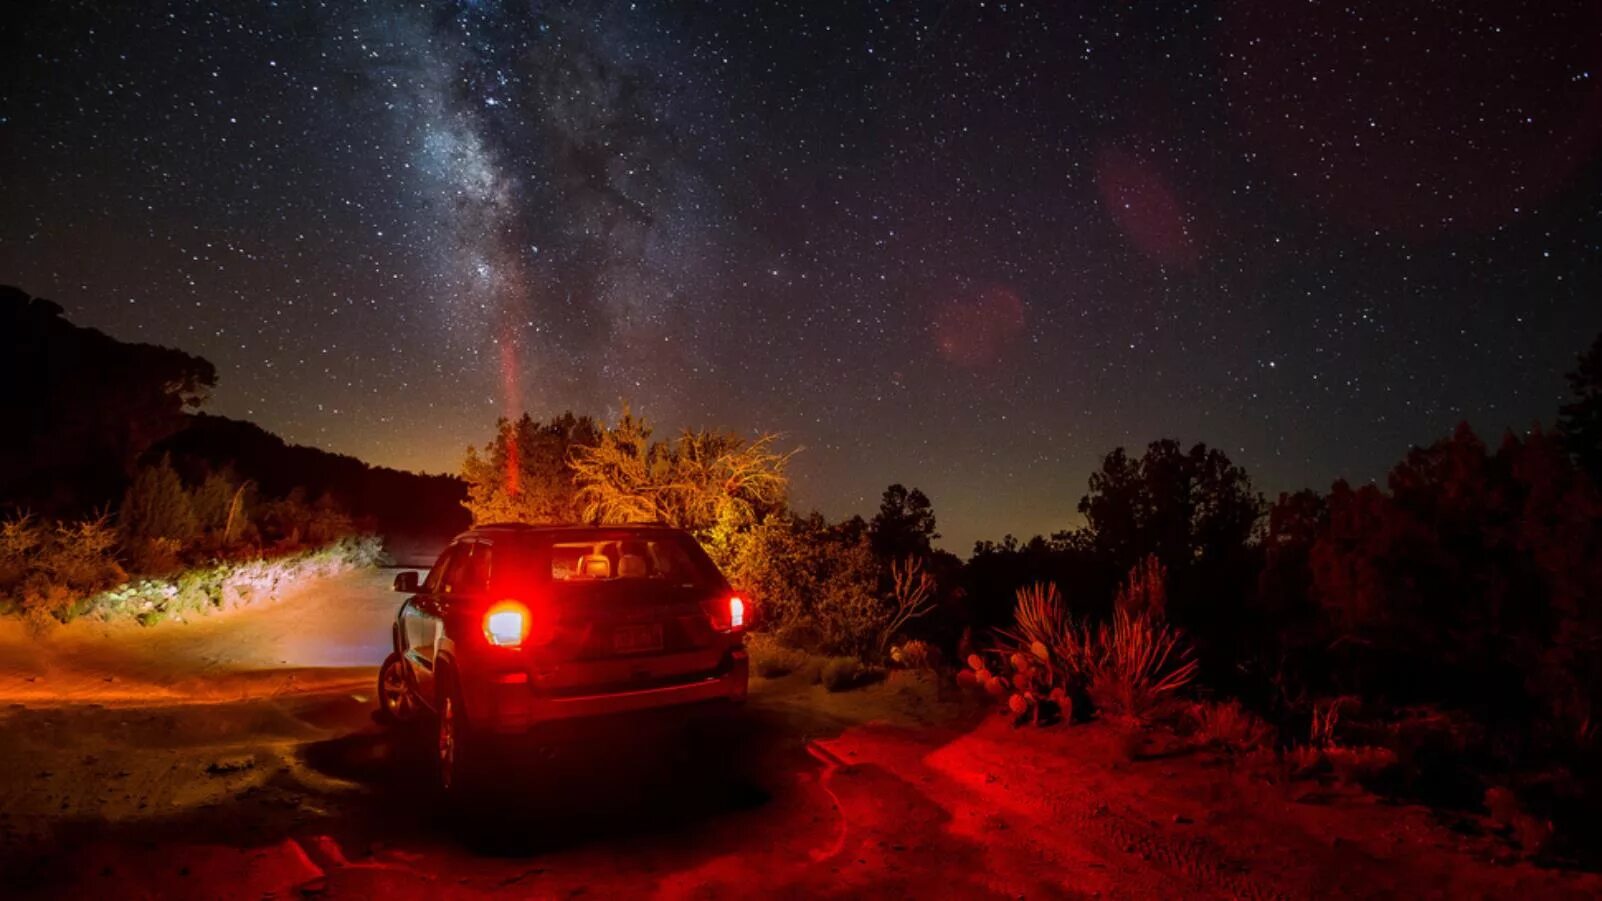 Ночь дорога и рок. Машина ночью. Машина ночью на дороге. Машина в лесу ночью. Машина на фоне звездного неба.